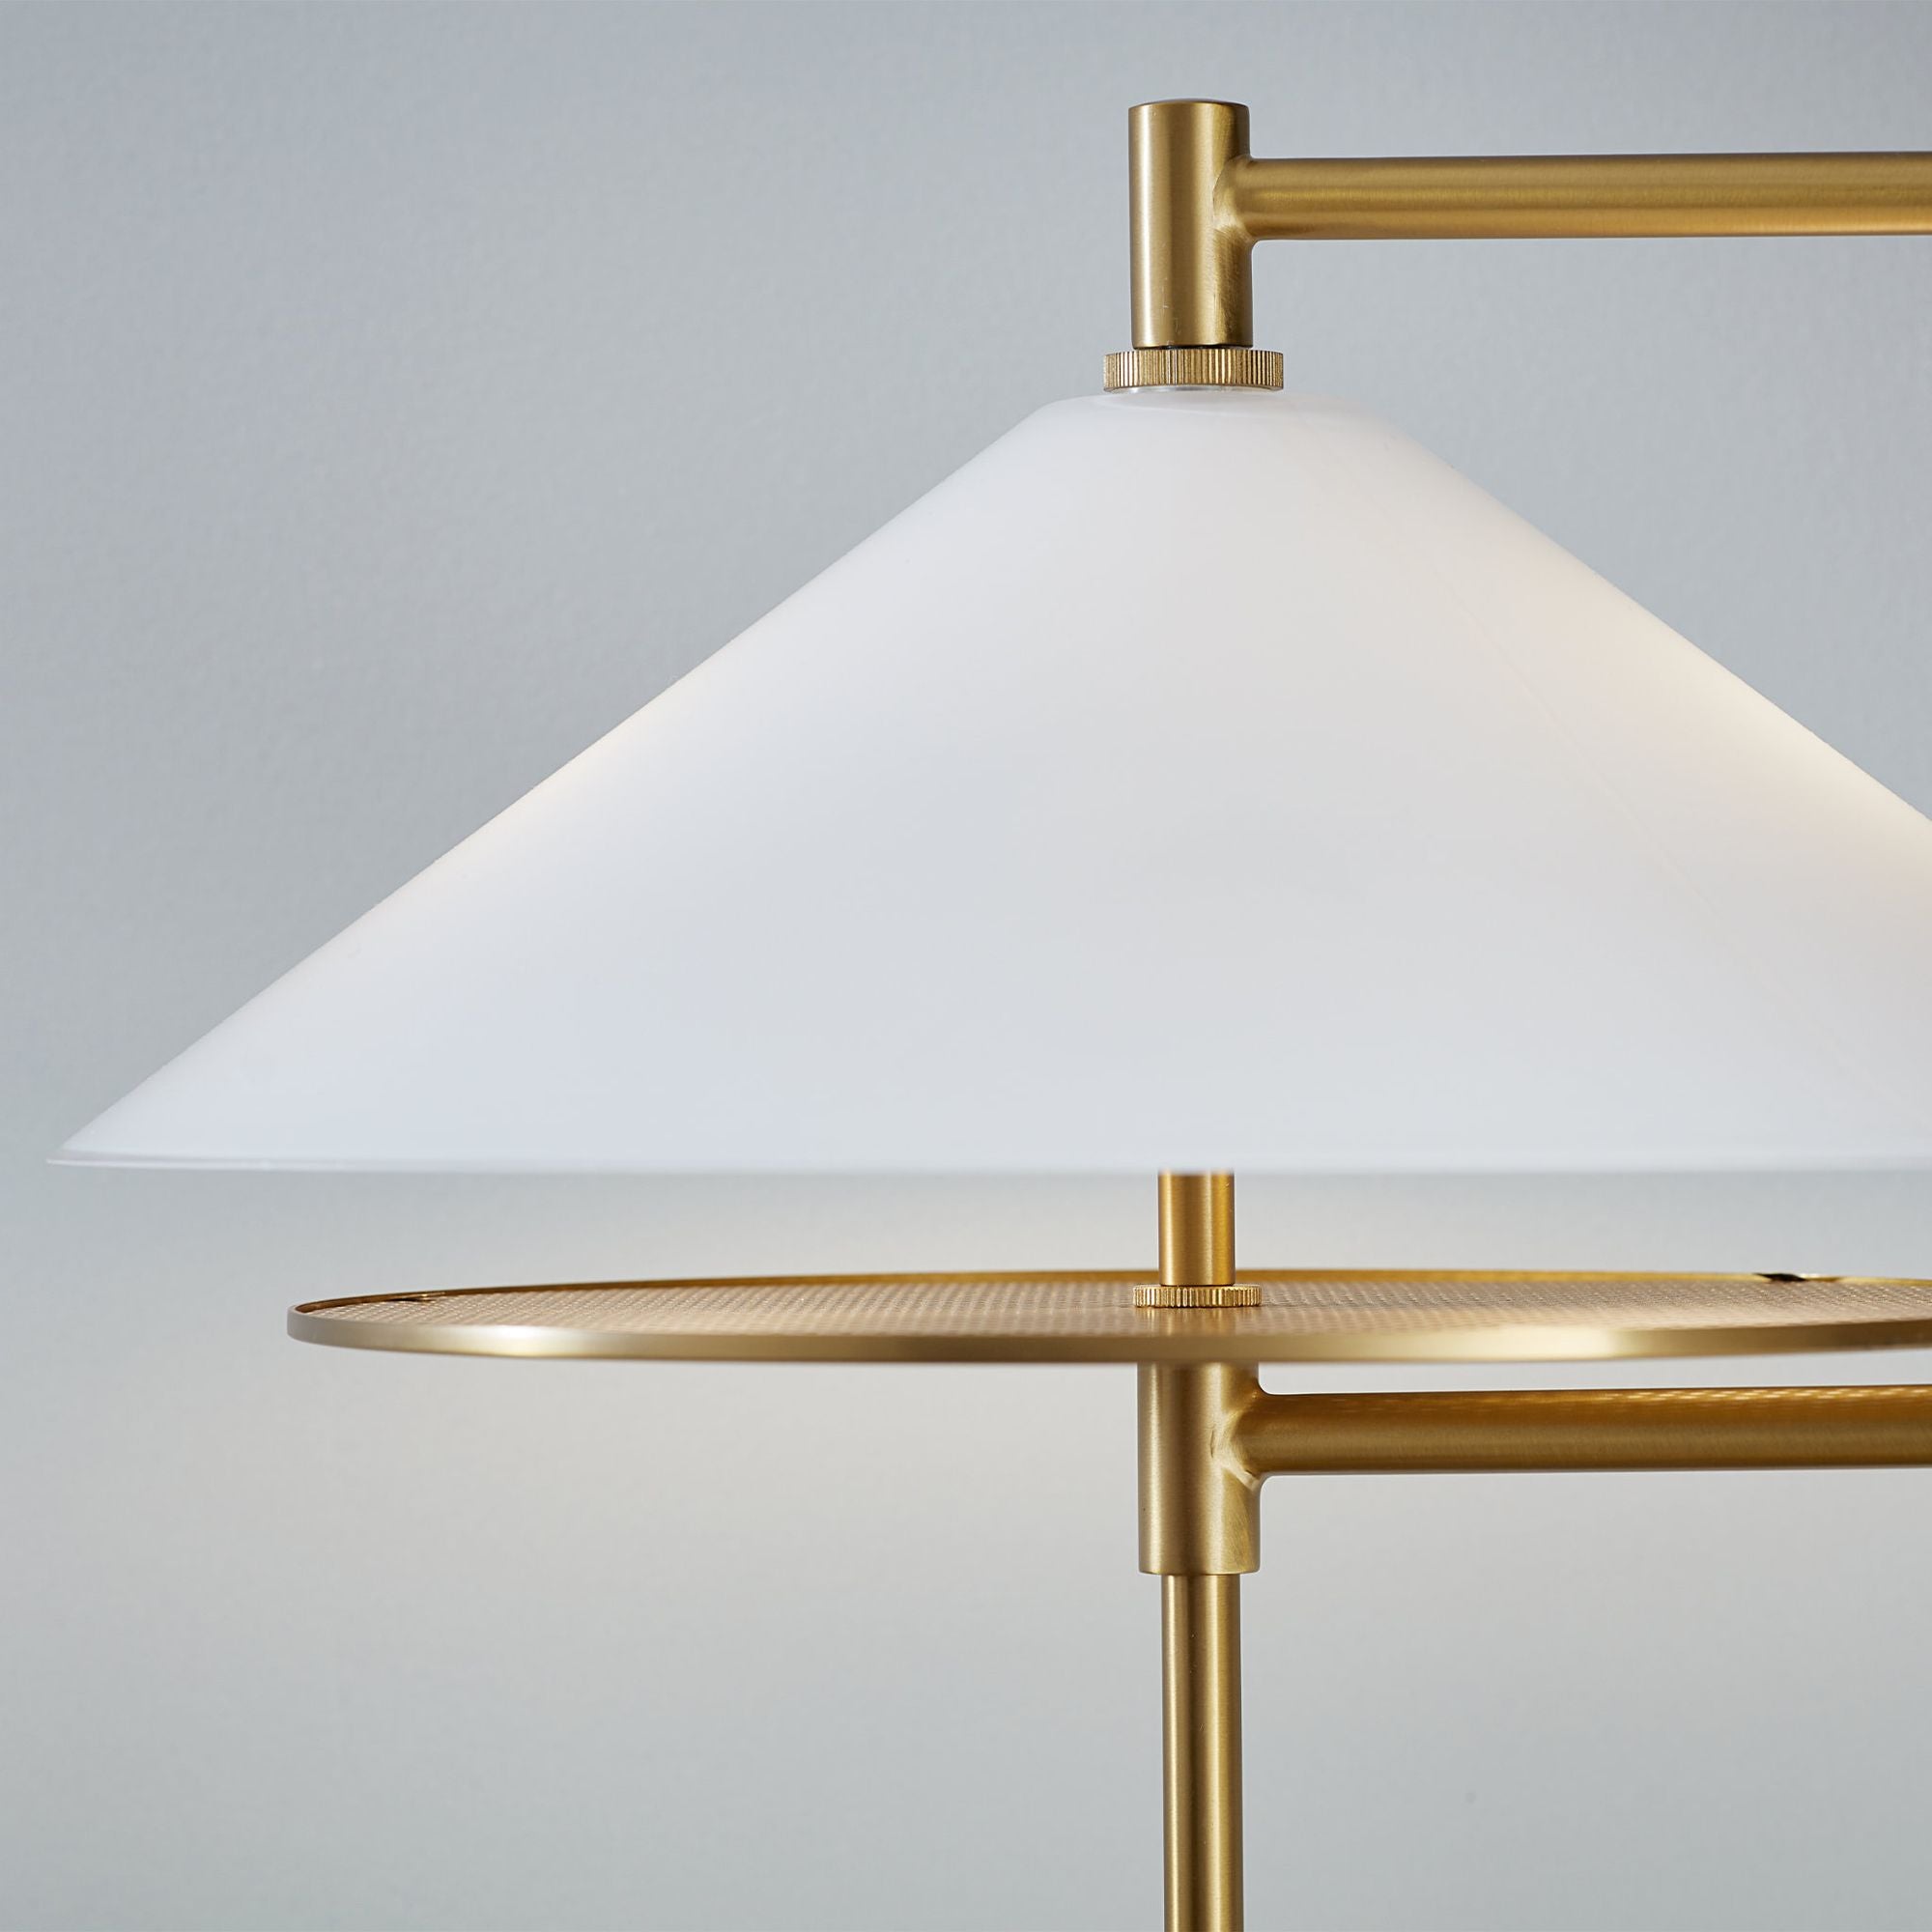 Kelly Wearstler Gesture Table Lamp in Burnished Brass